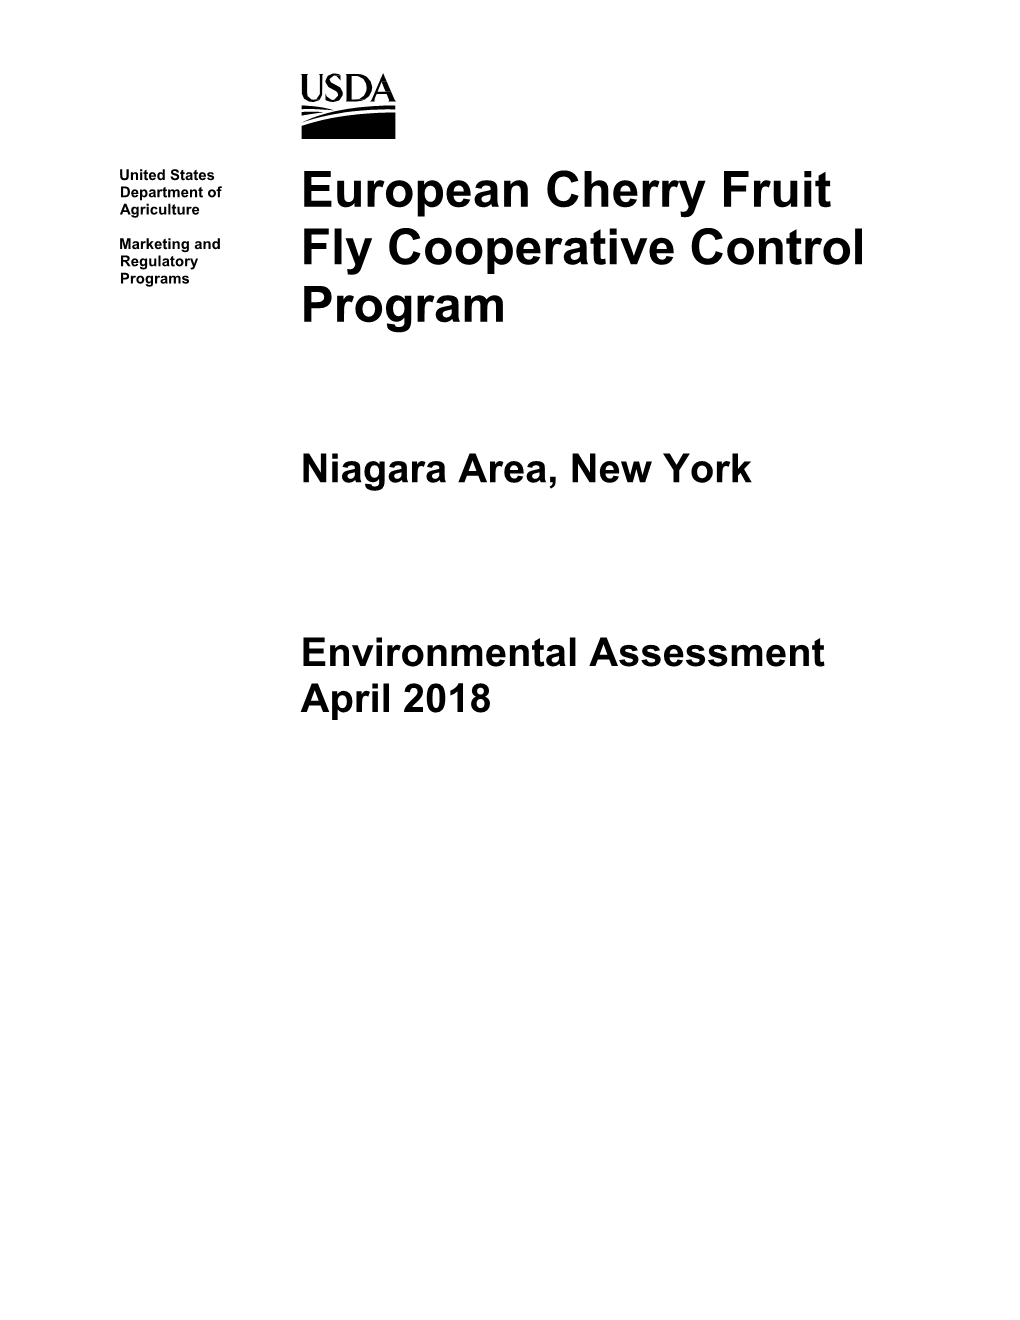 European Cherry Fruit Fly Cooperative Control Program